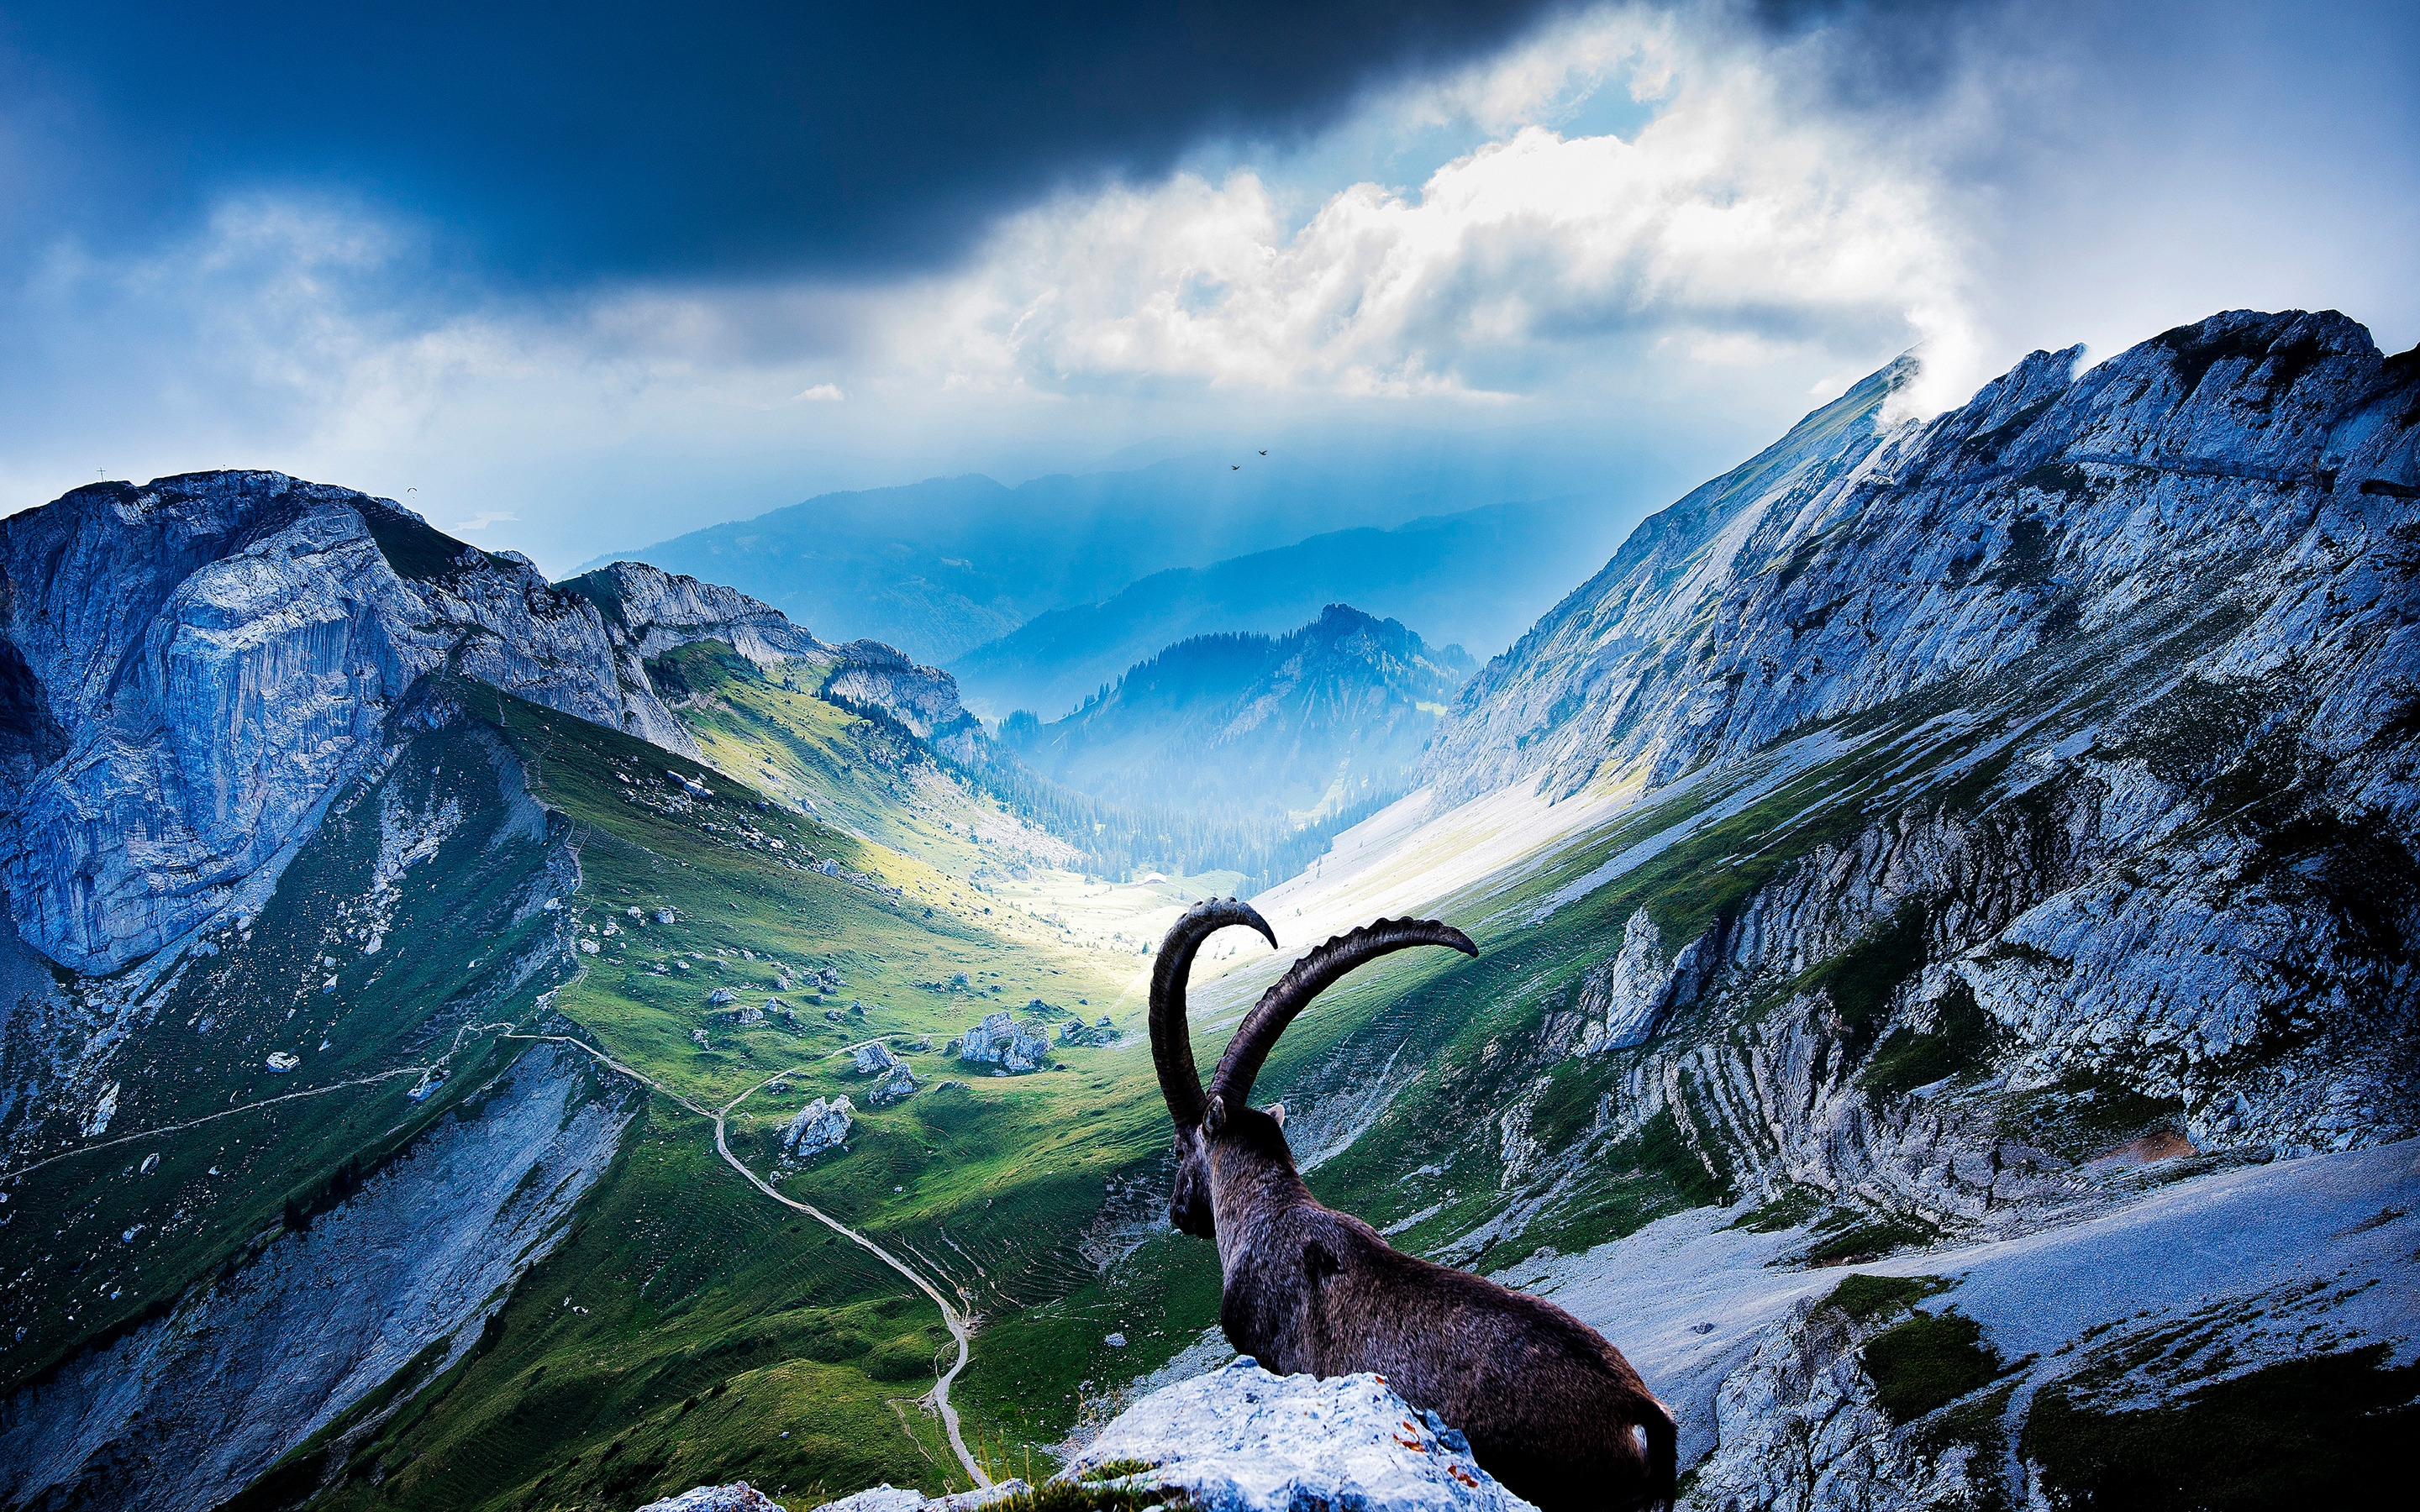 Goat at Mount Pilatus for 2880 x 1800 Retina Display resolution